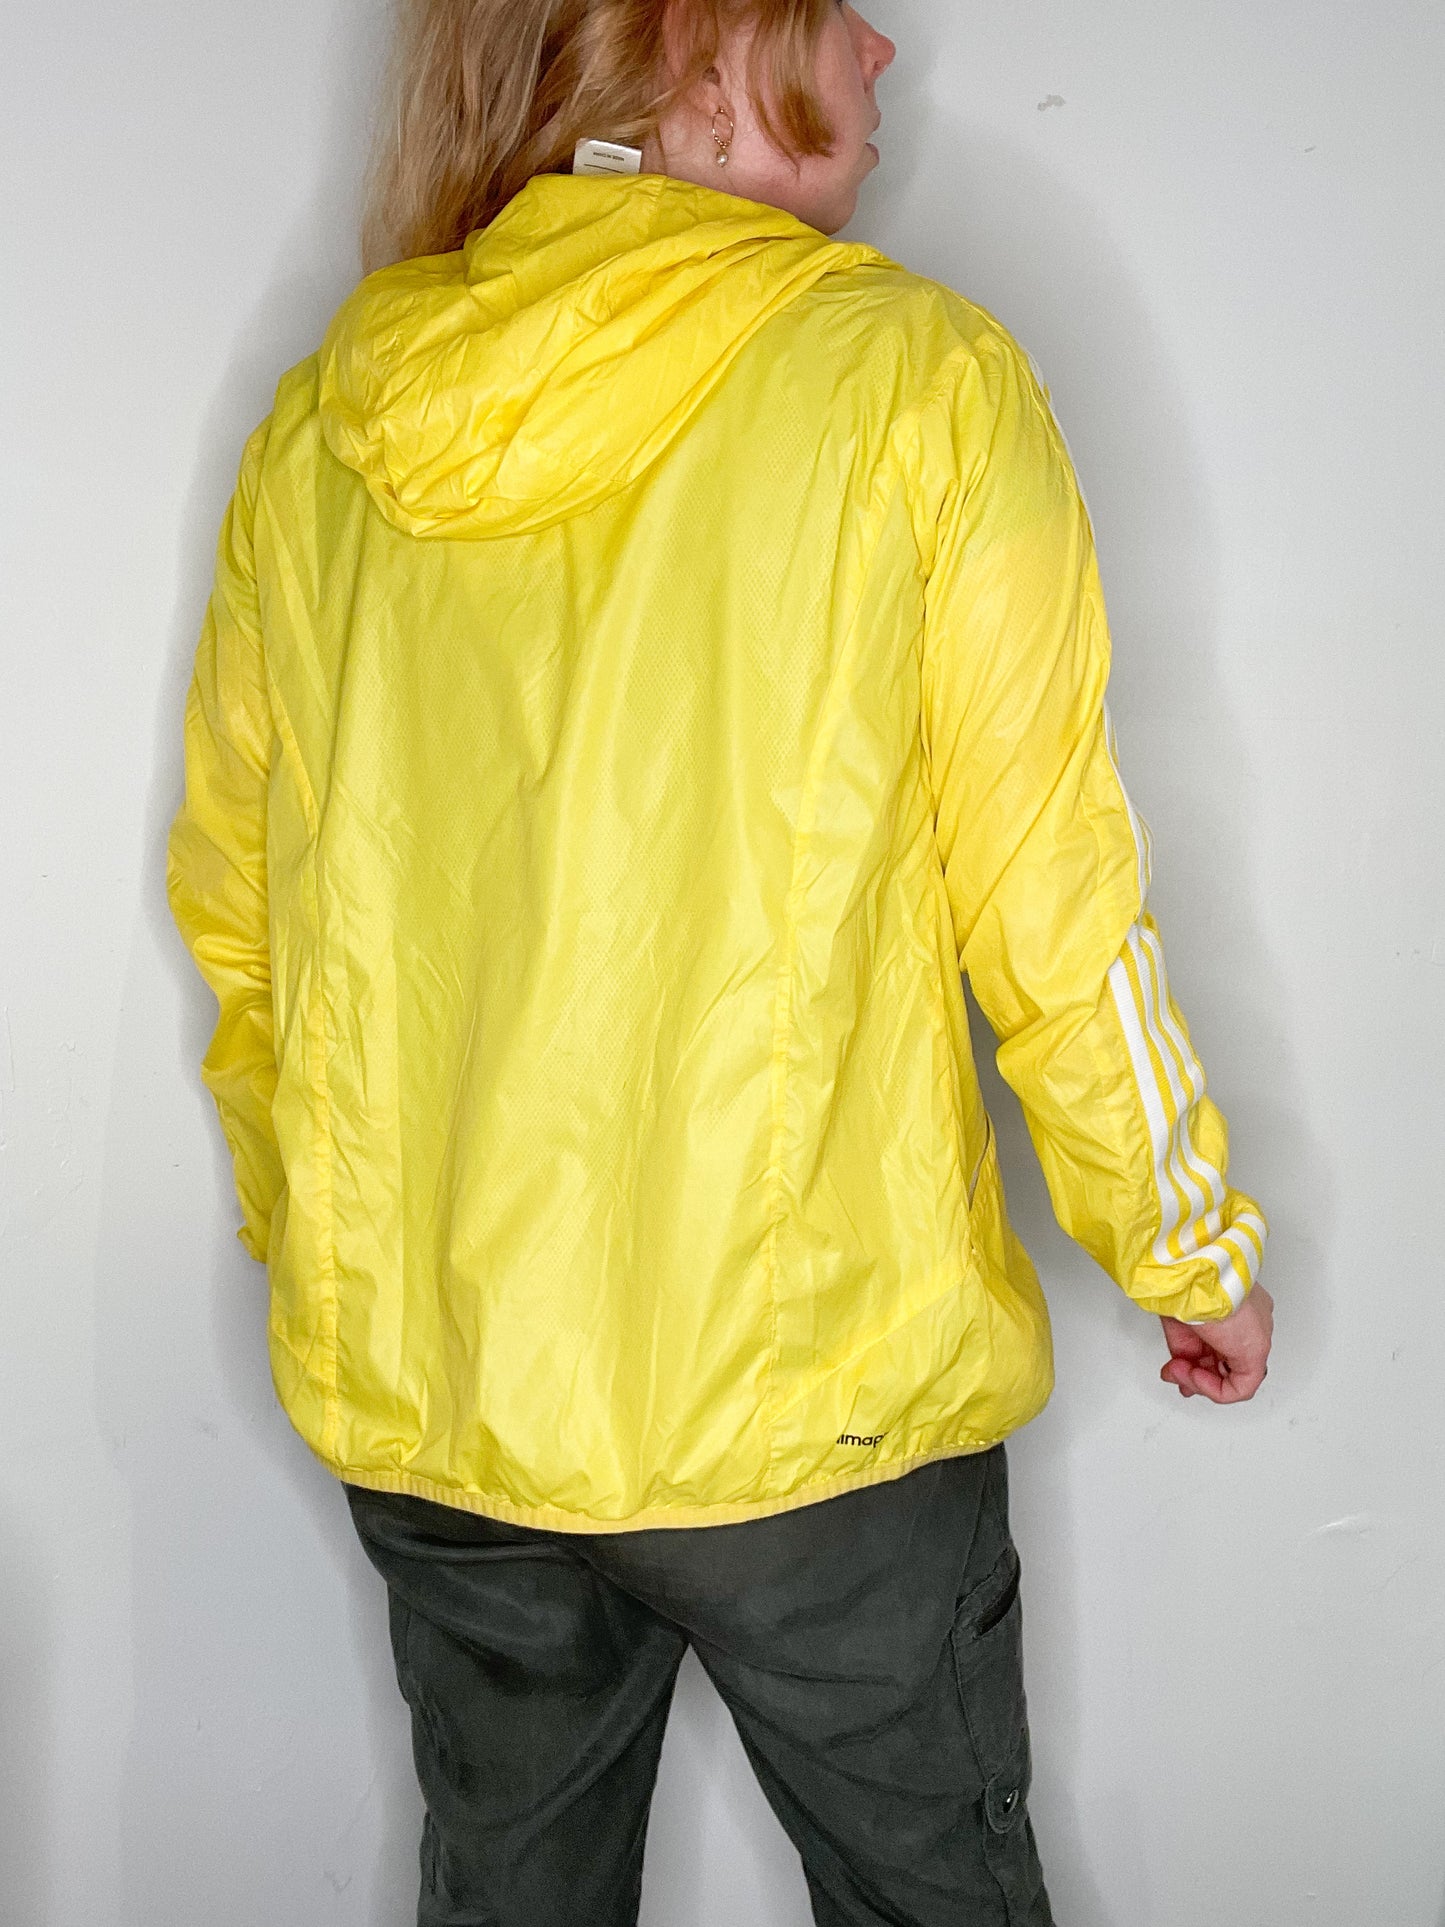 Adidas Yellow Full Zip Nylon Windbreaker Jacket - Small